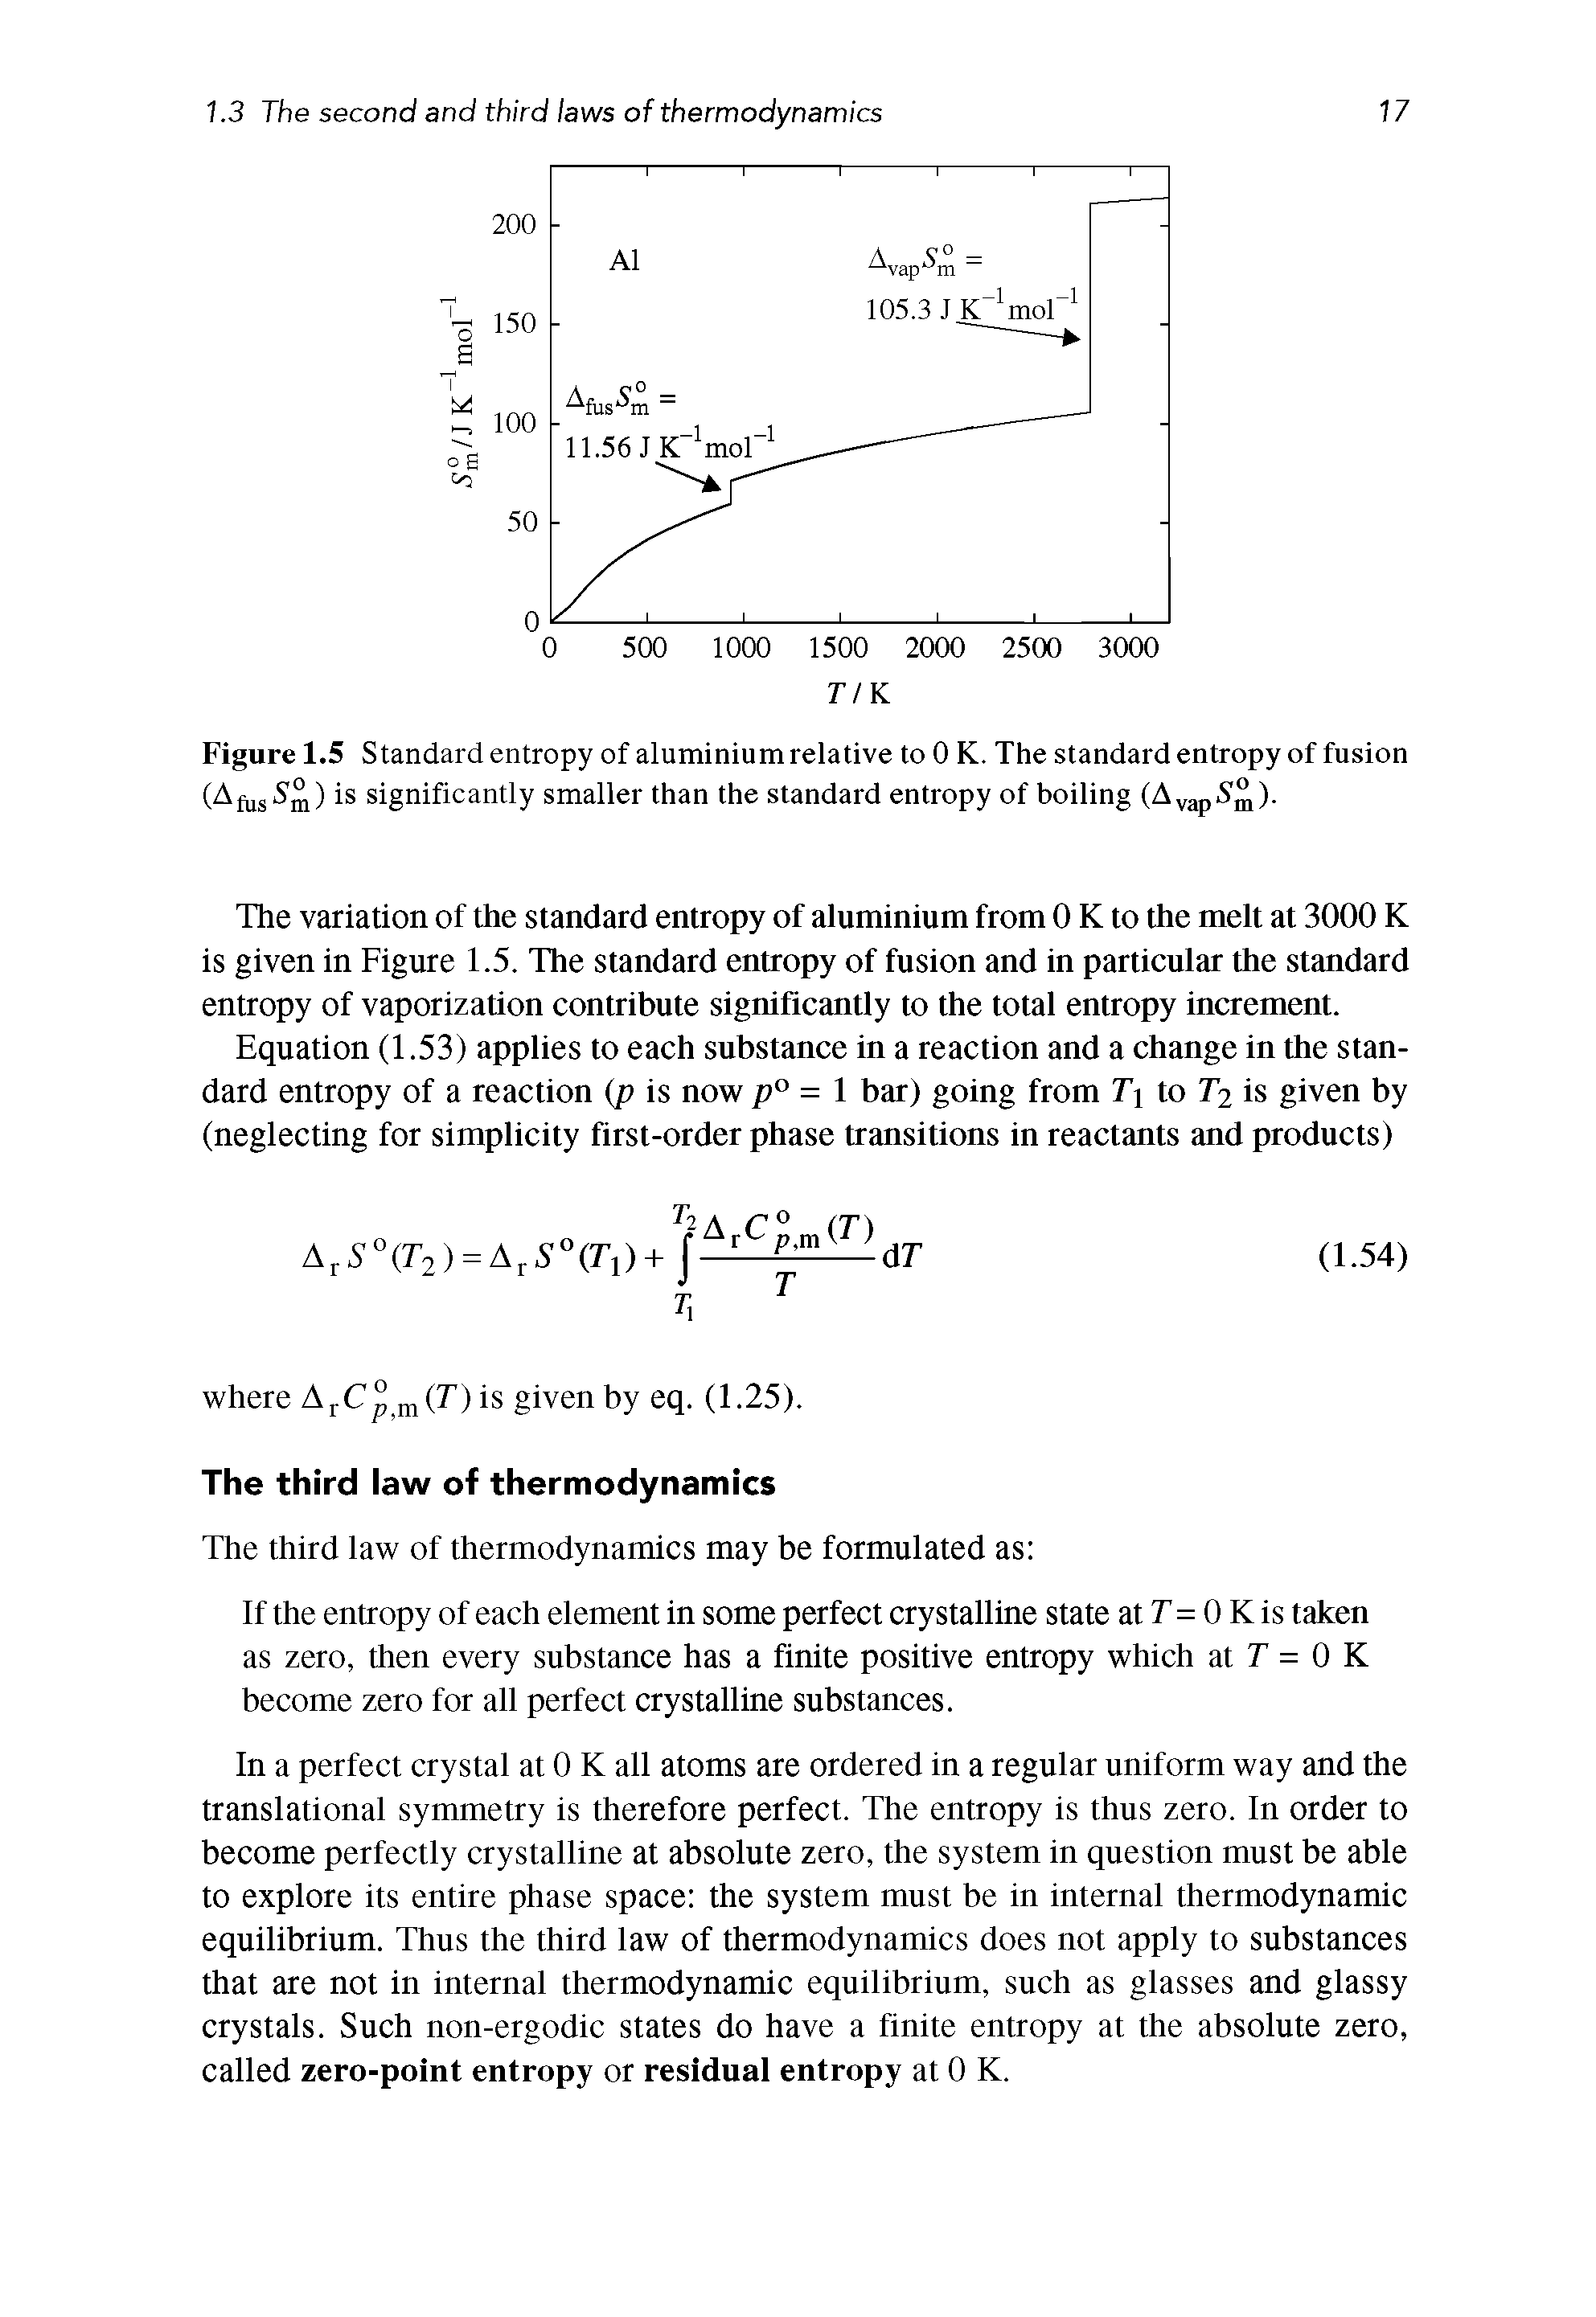 Figure 1.5 Standard entropy of aluminium relative to 0 K. The standard entropy of fusion (AfuS S m) is significantly smaller than the standard entropy of boiling (A pS, ).